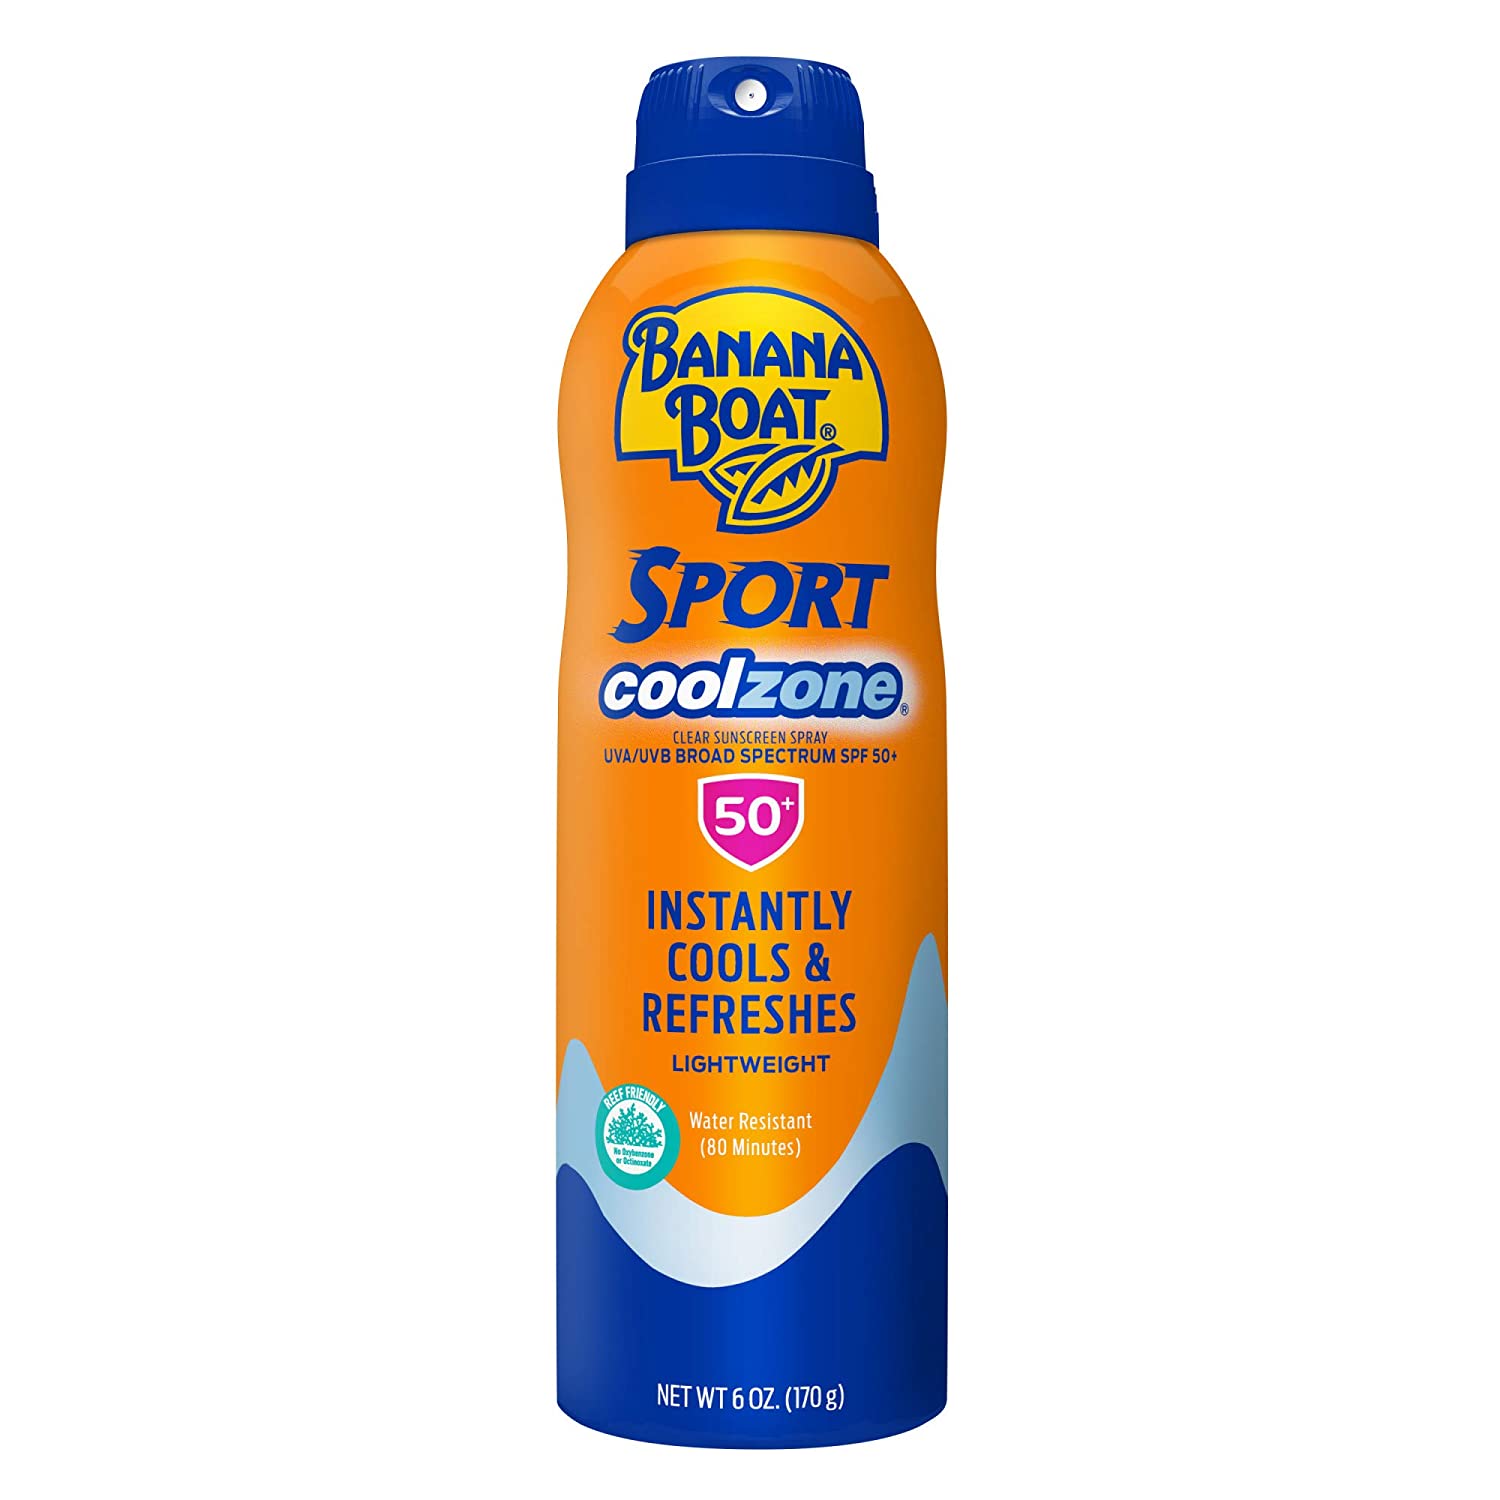 Banana Boat Sport Coolzone Sunscreen Lotion Spf 50 - 170gm